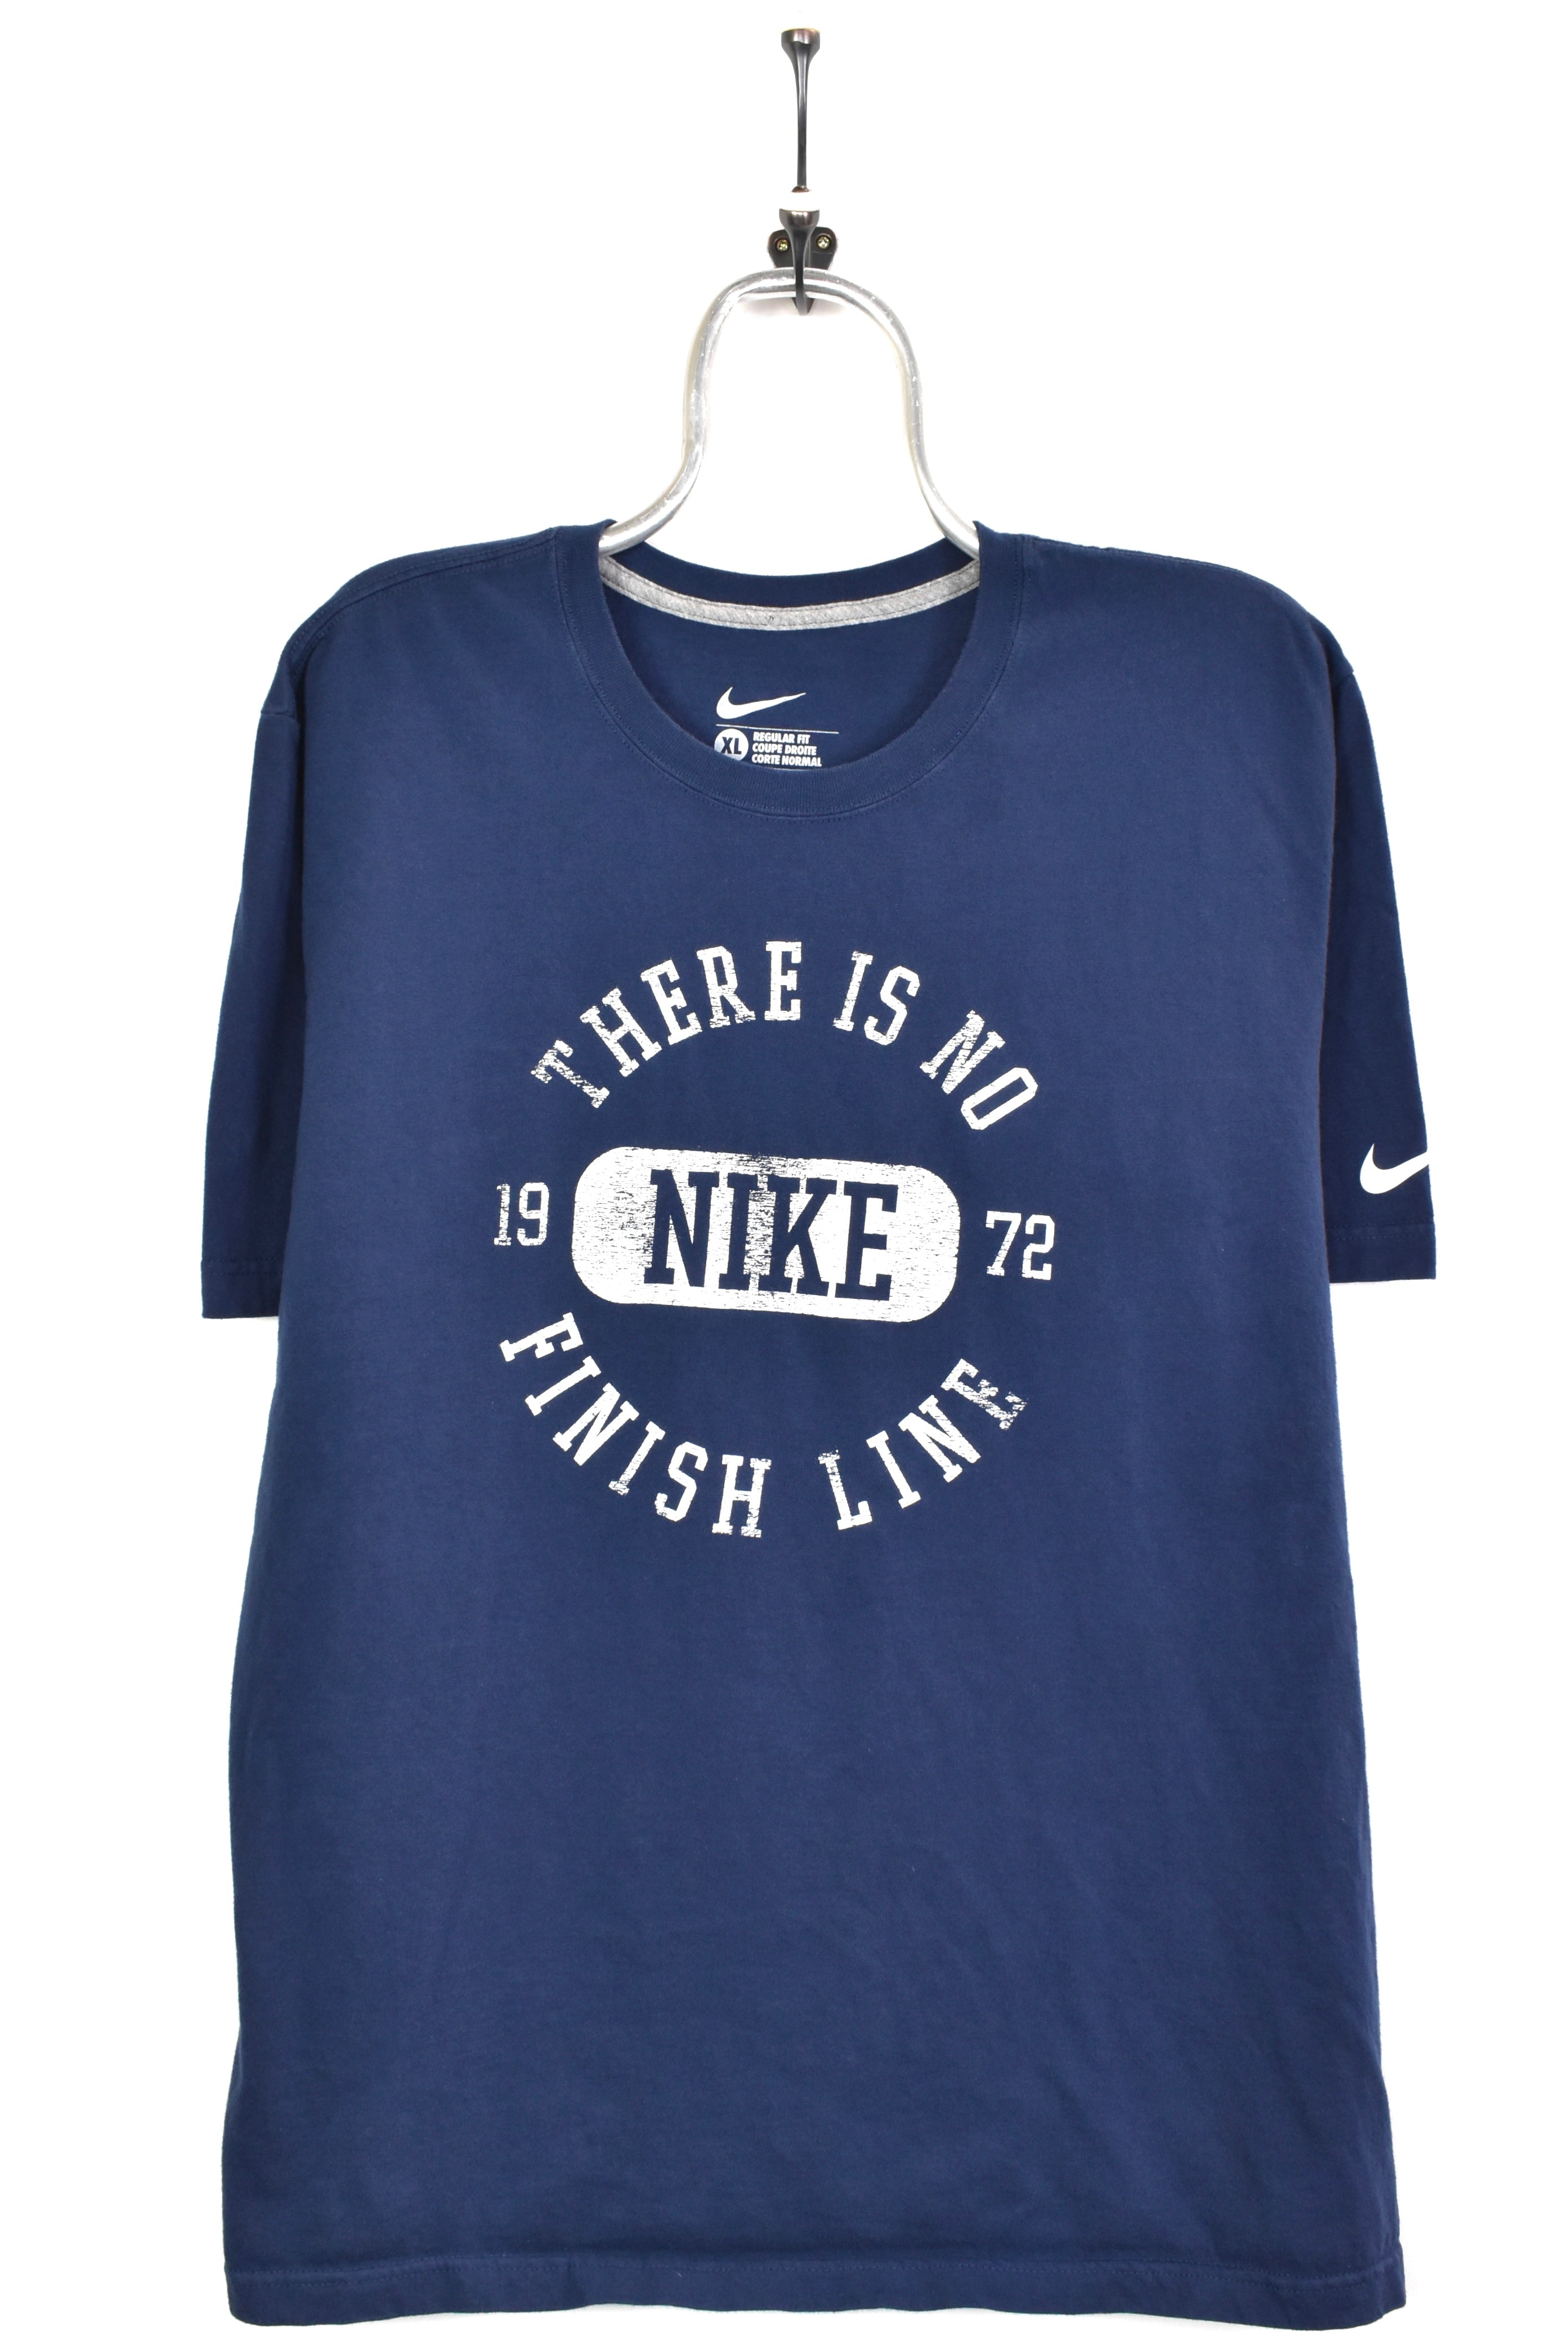 Modern Nike shirt , short sleeve navy blue graphic tee - AU L NIKE